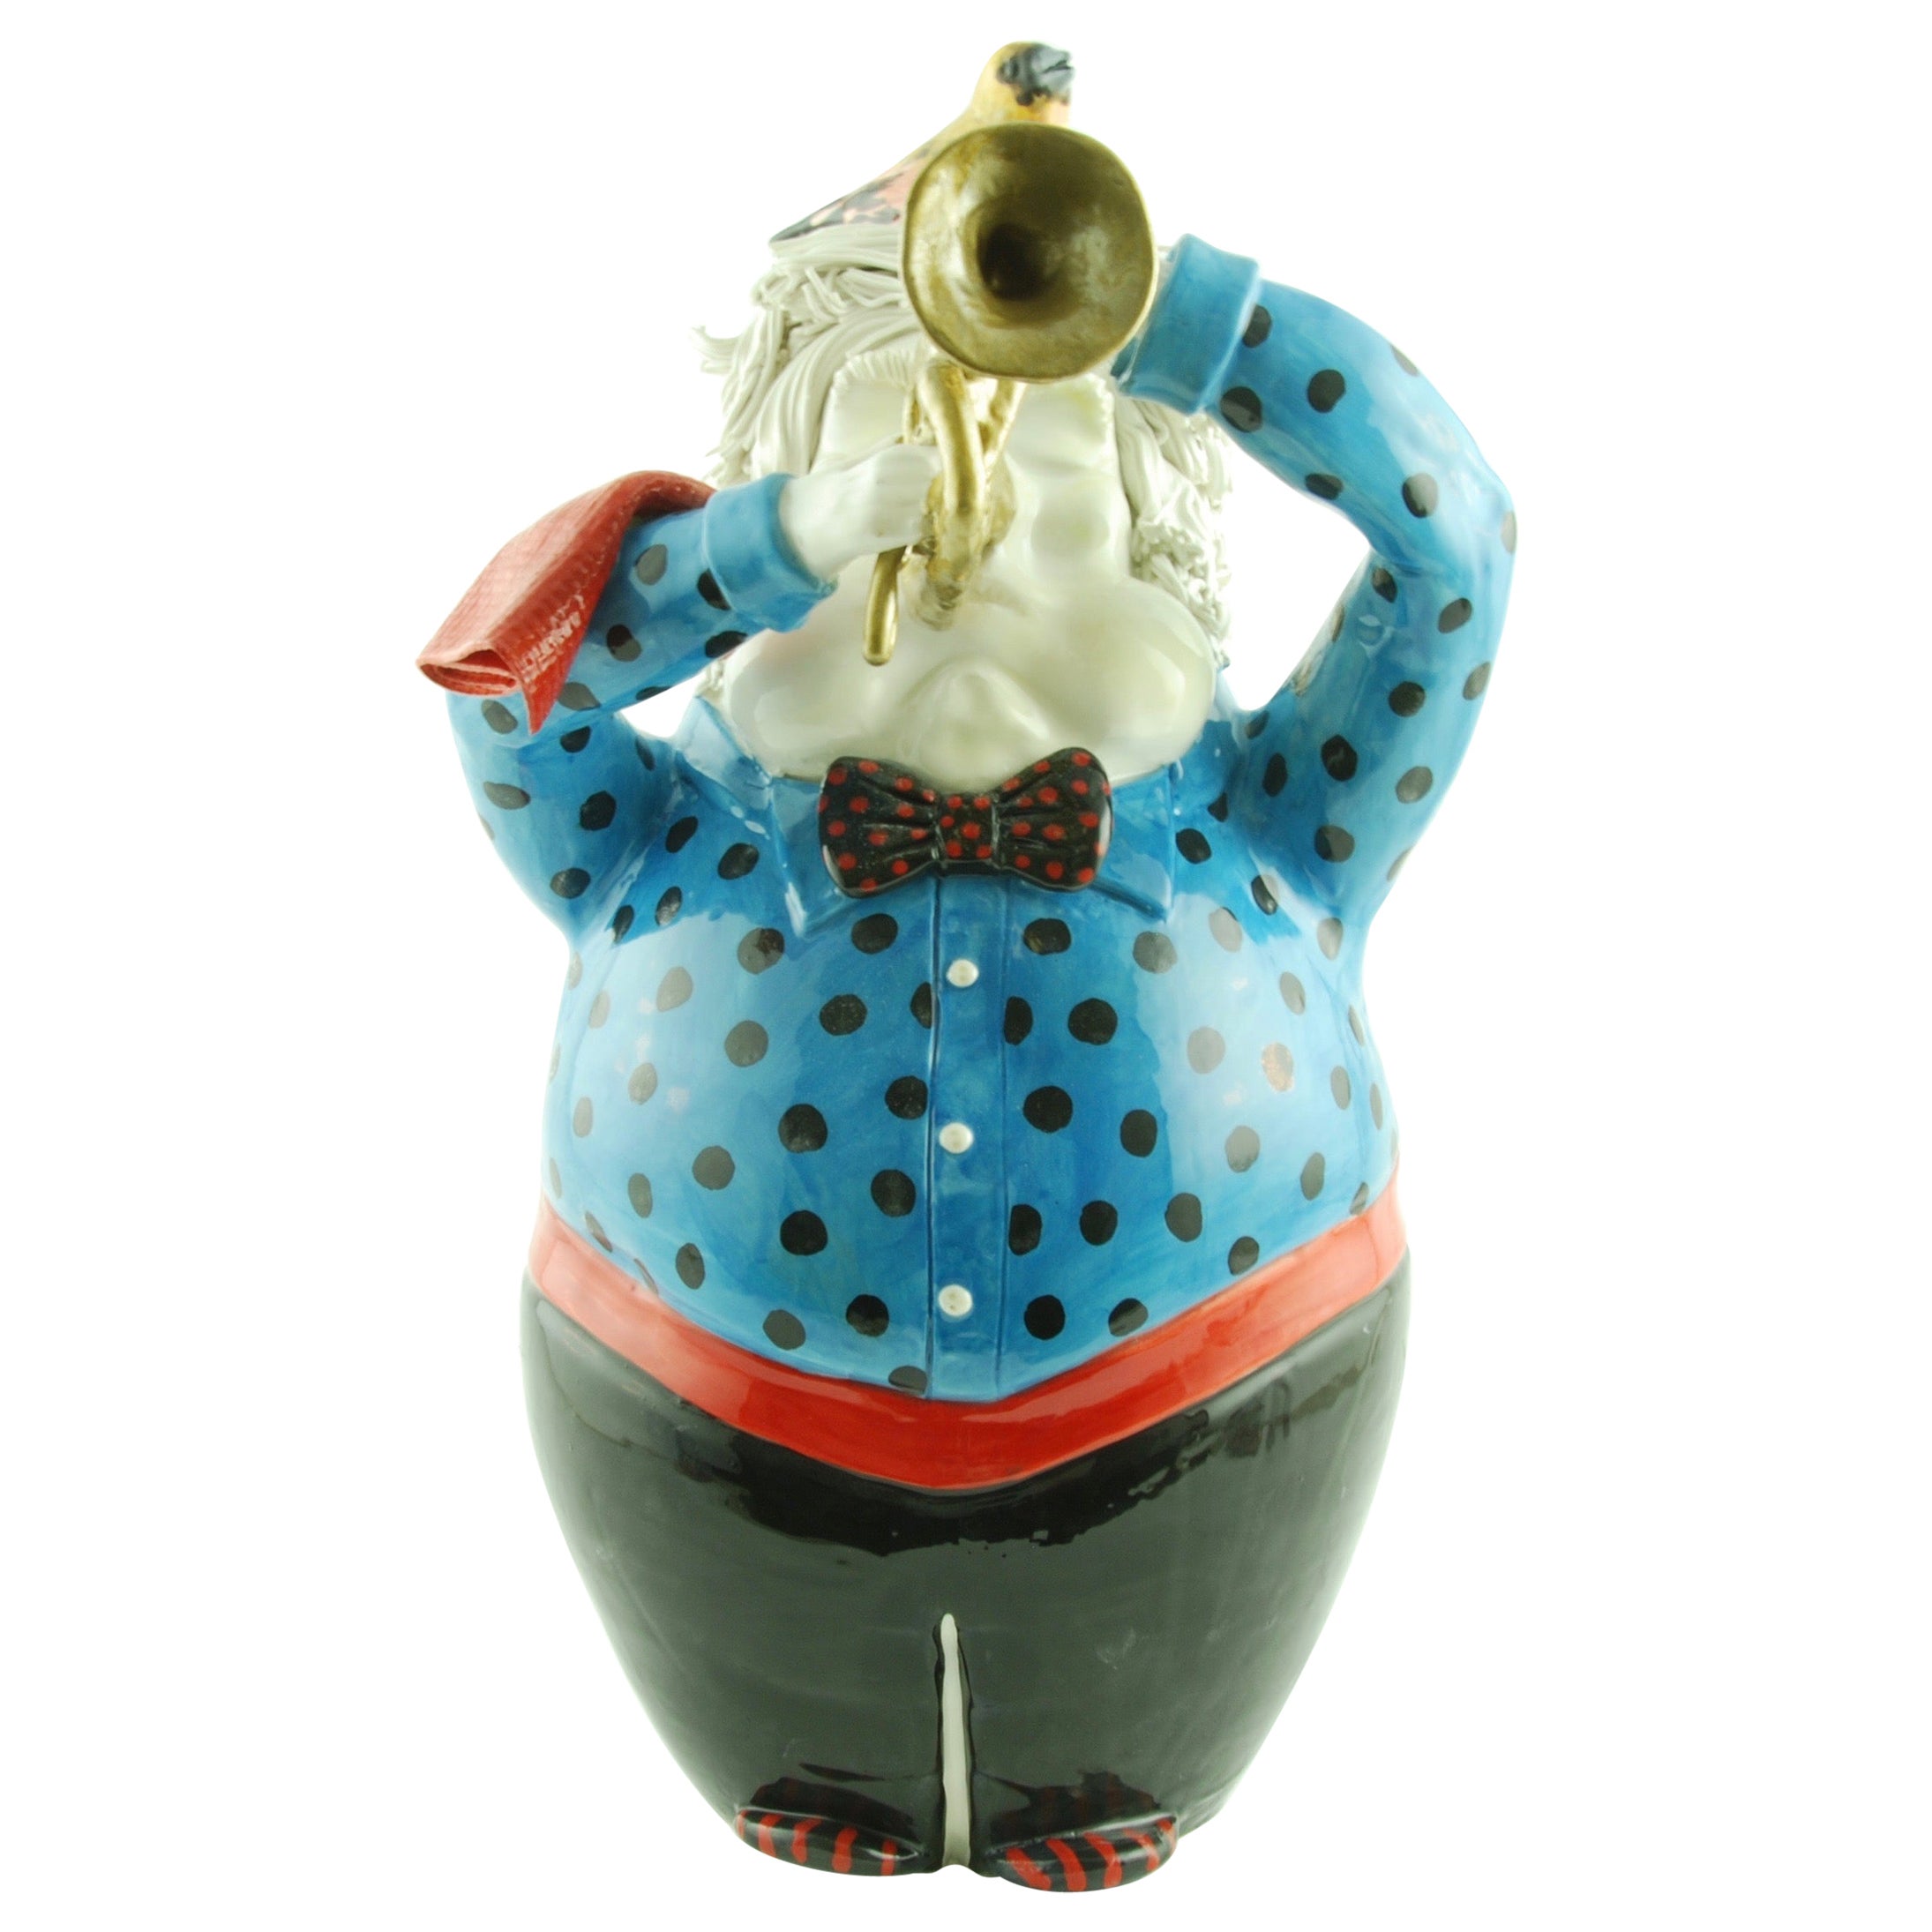 Musician Trumpet Decorative Ceramic Piece, Handmade Italy, 2021, Hand-Crafted